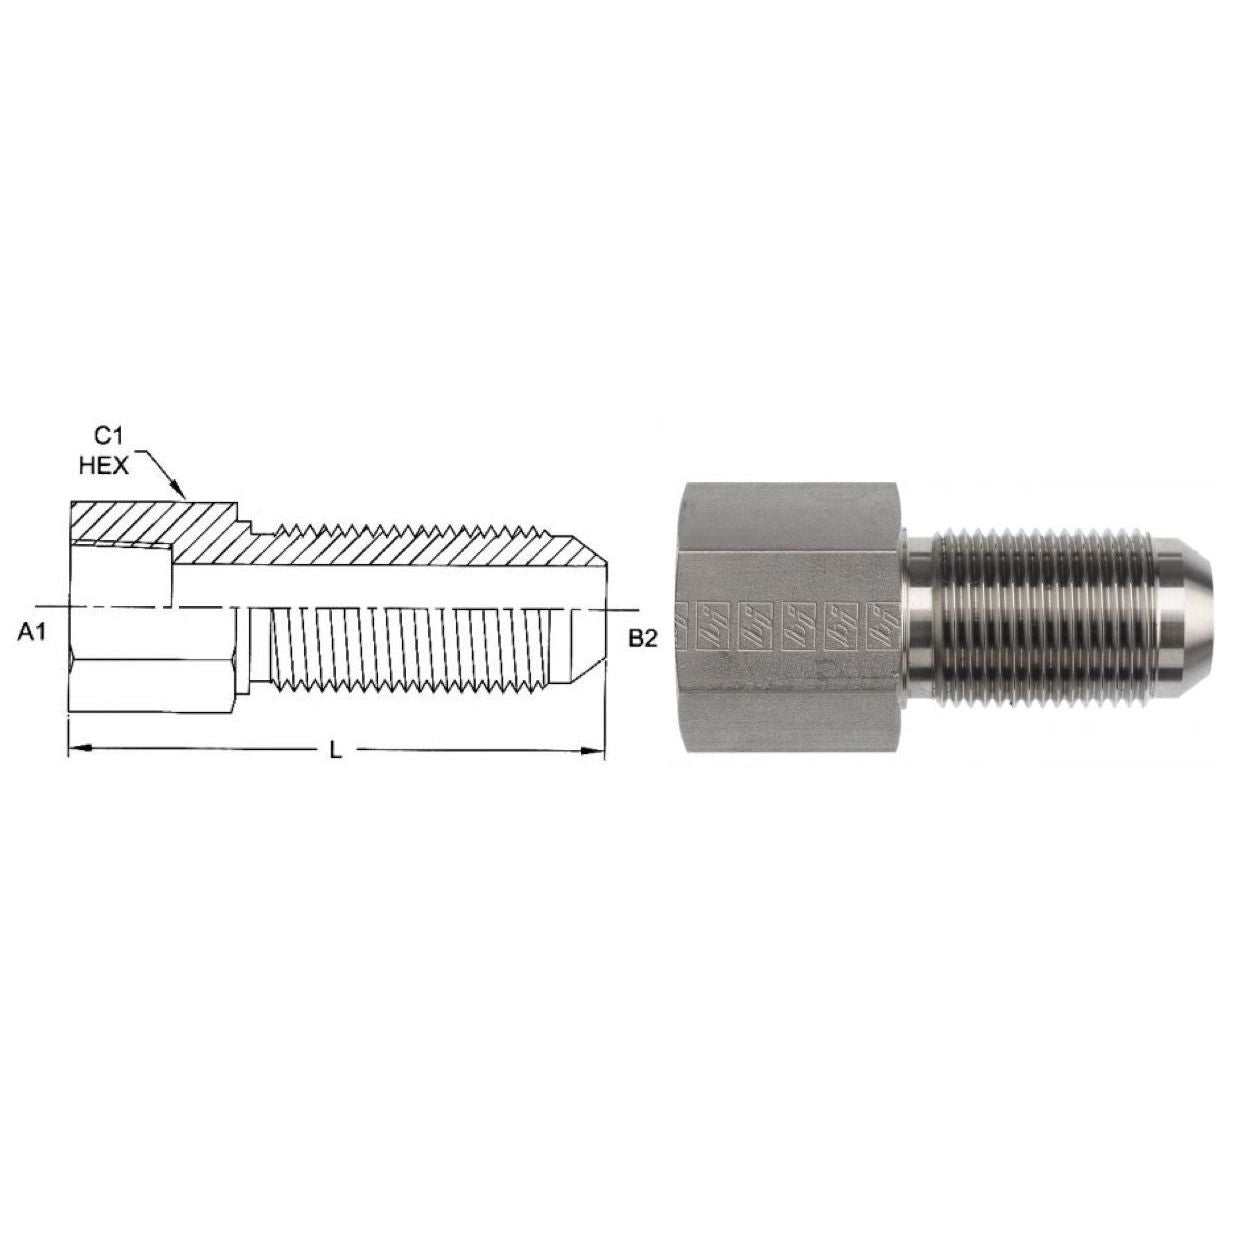 2705-06-08-SS : OneHydraulics Bulkhead Adapter, Straight, 0.375 (3/8") JIC JIC x 0.5 (1/2") Male, Stainless Steel, 6000psi